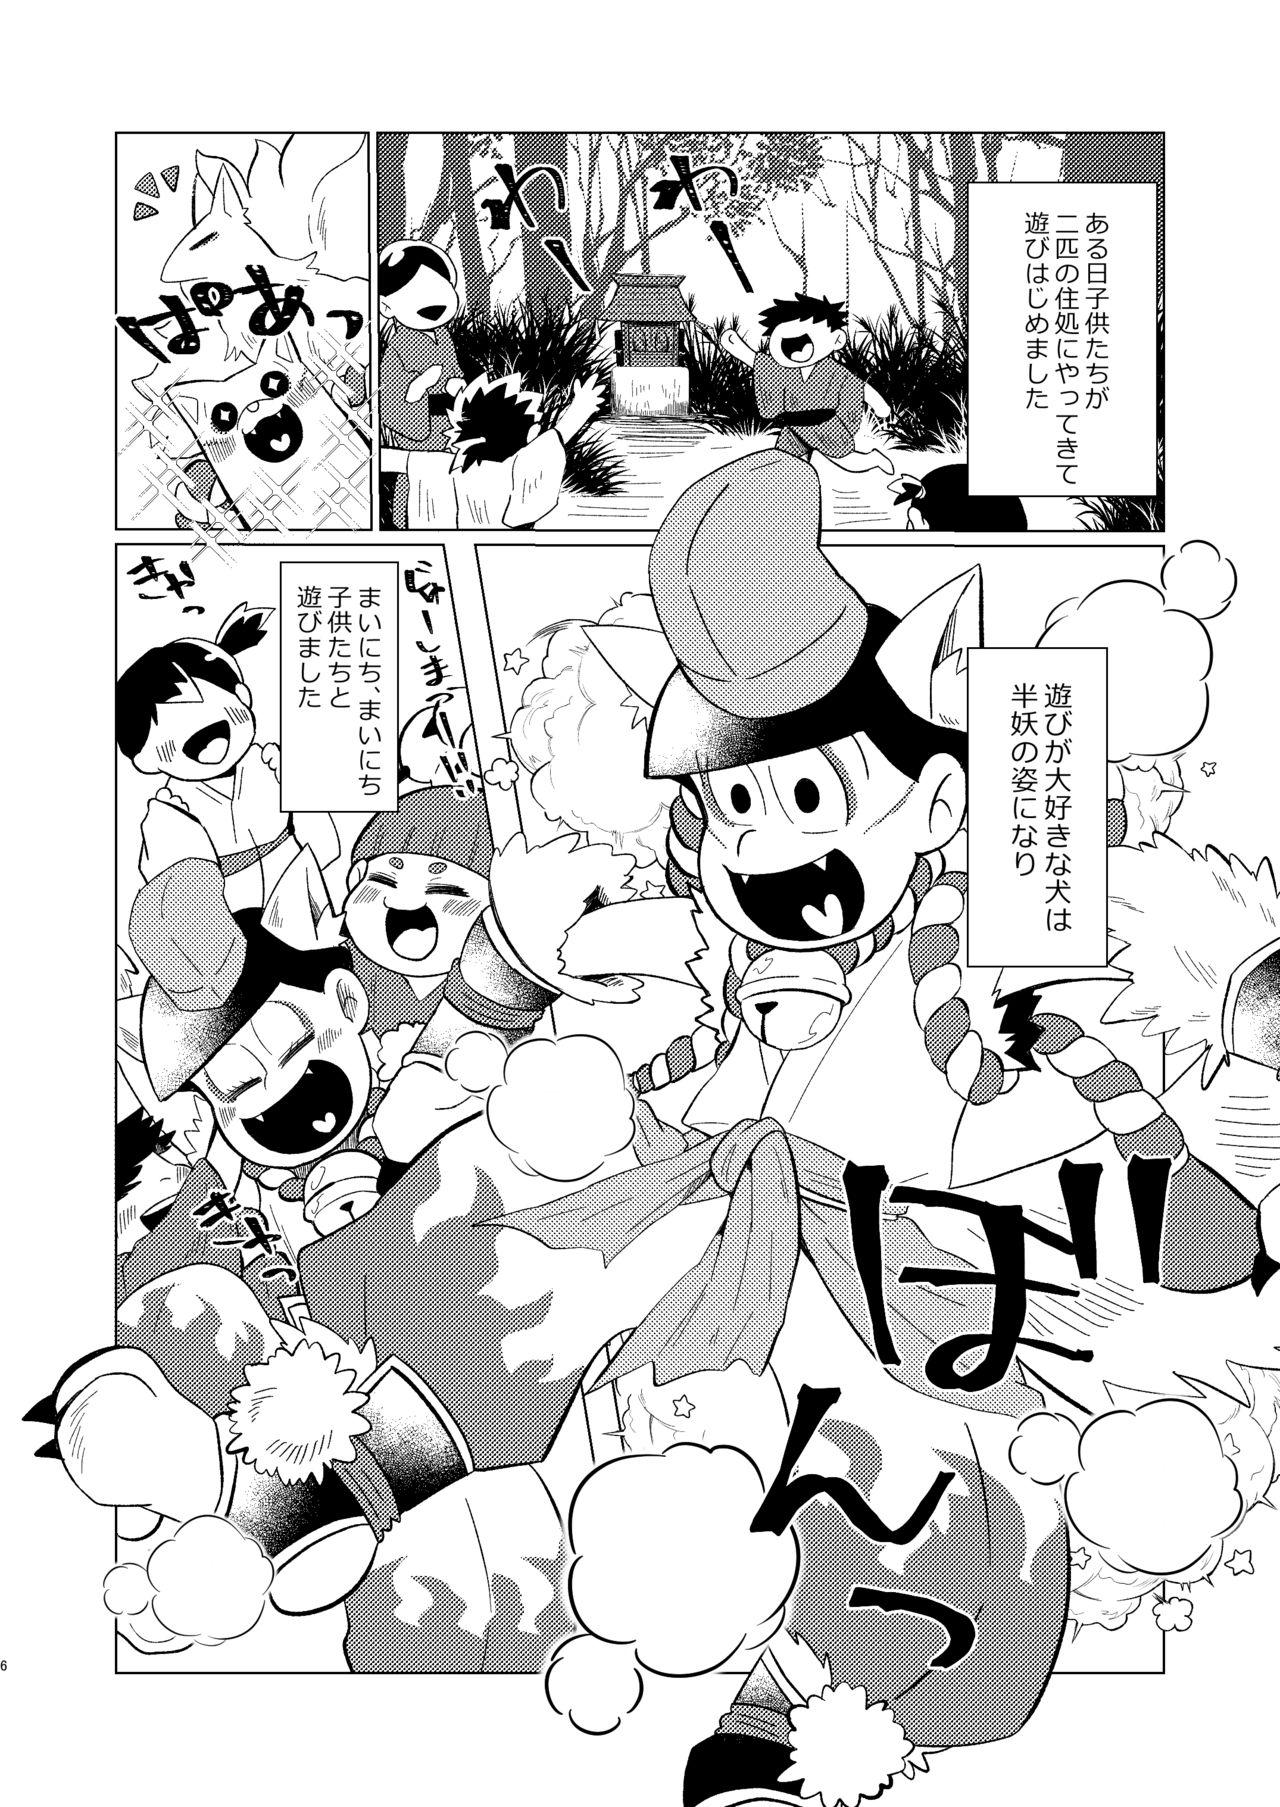 Tiny Titties Megure, Megure Rinne no Hate e - Osomatsu-san Gordibuena - Page 4